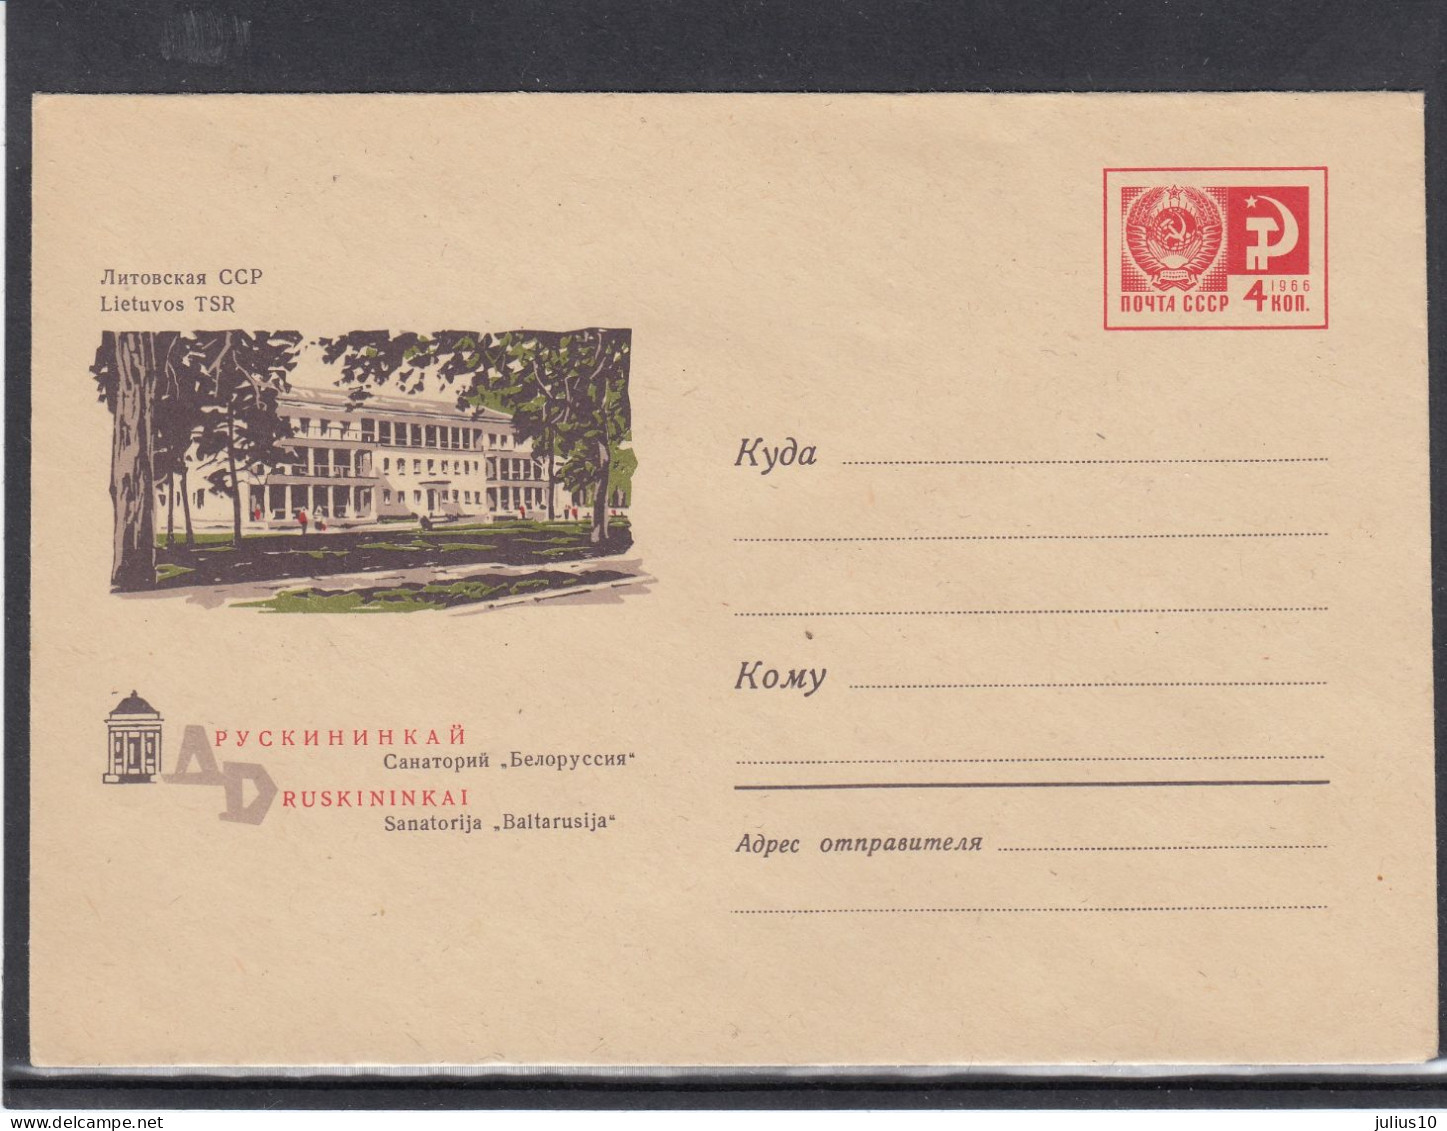 LITHUANIA (USSR) 1967 Cover Druskininkai Sanatorium “Belarus” #LTV16 - Lituania